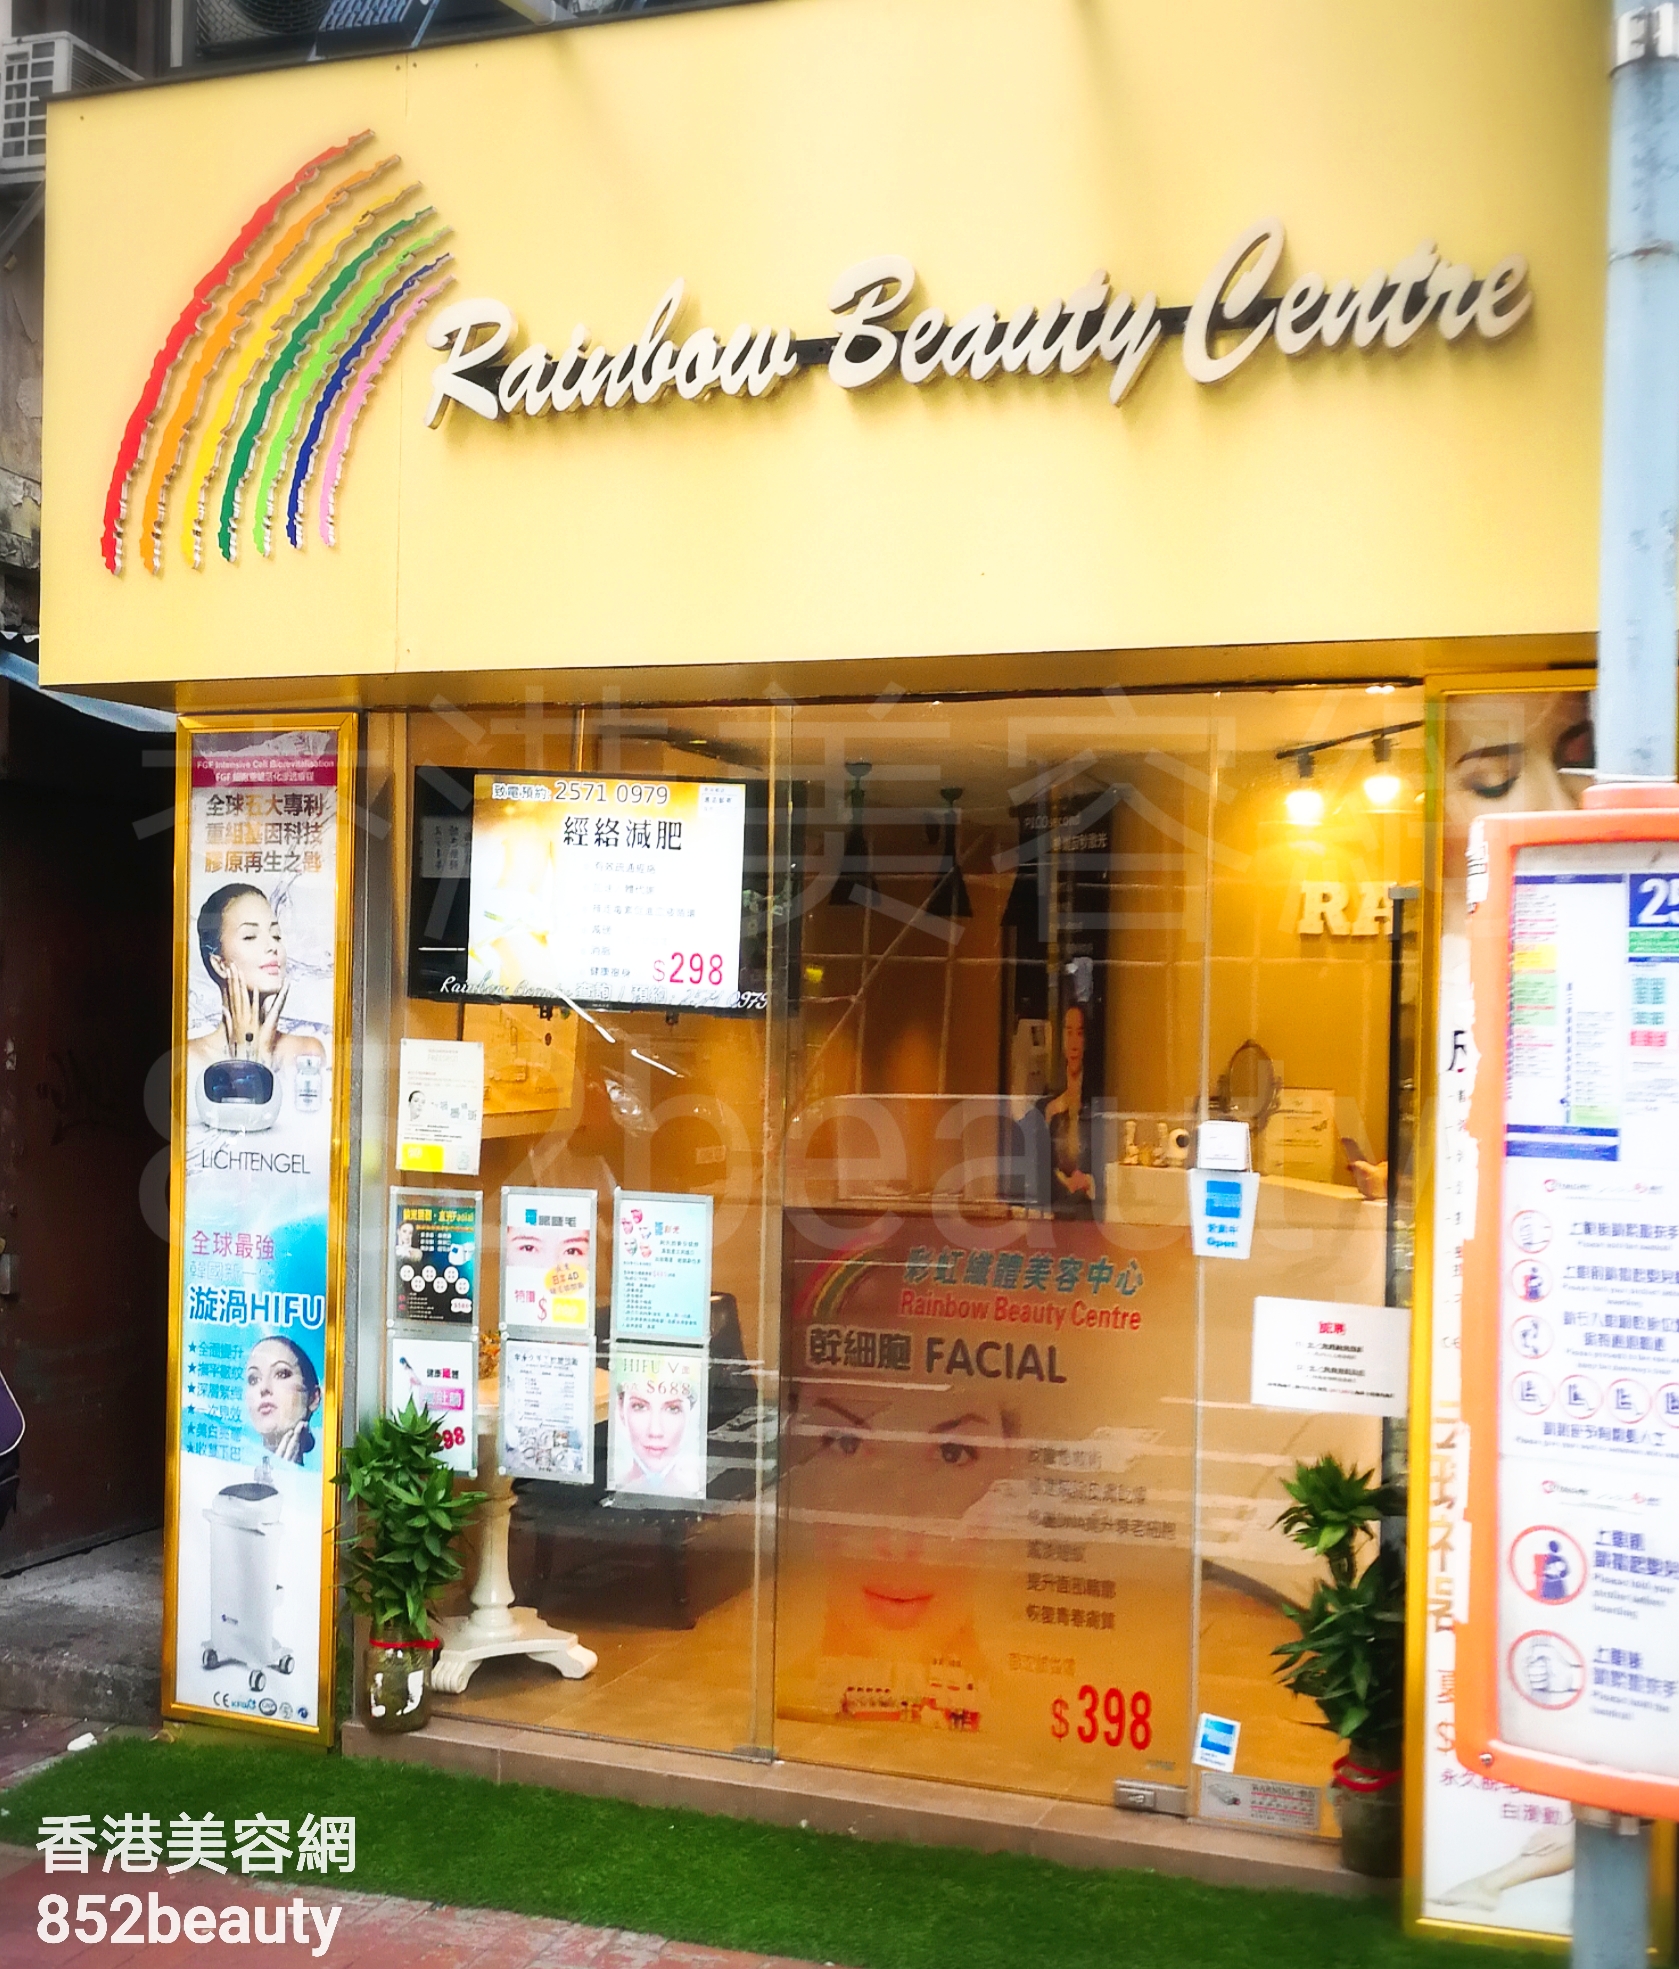 面部護理: Rainbow Beauty Centre